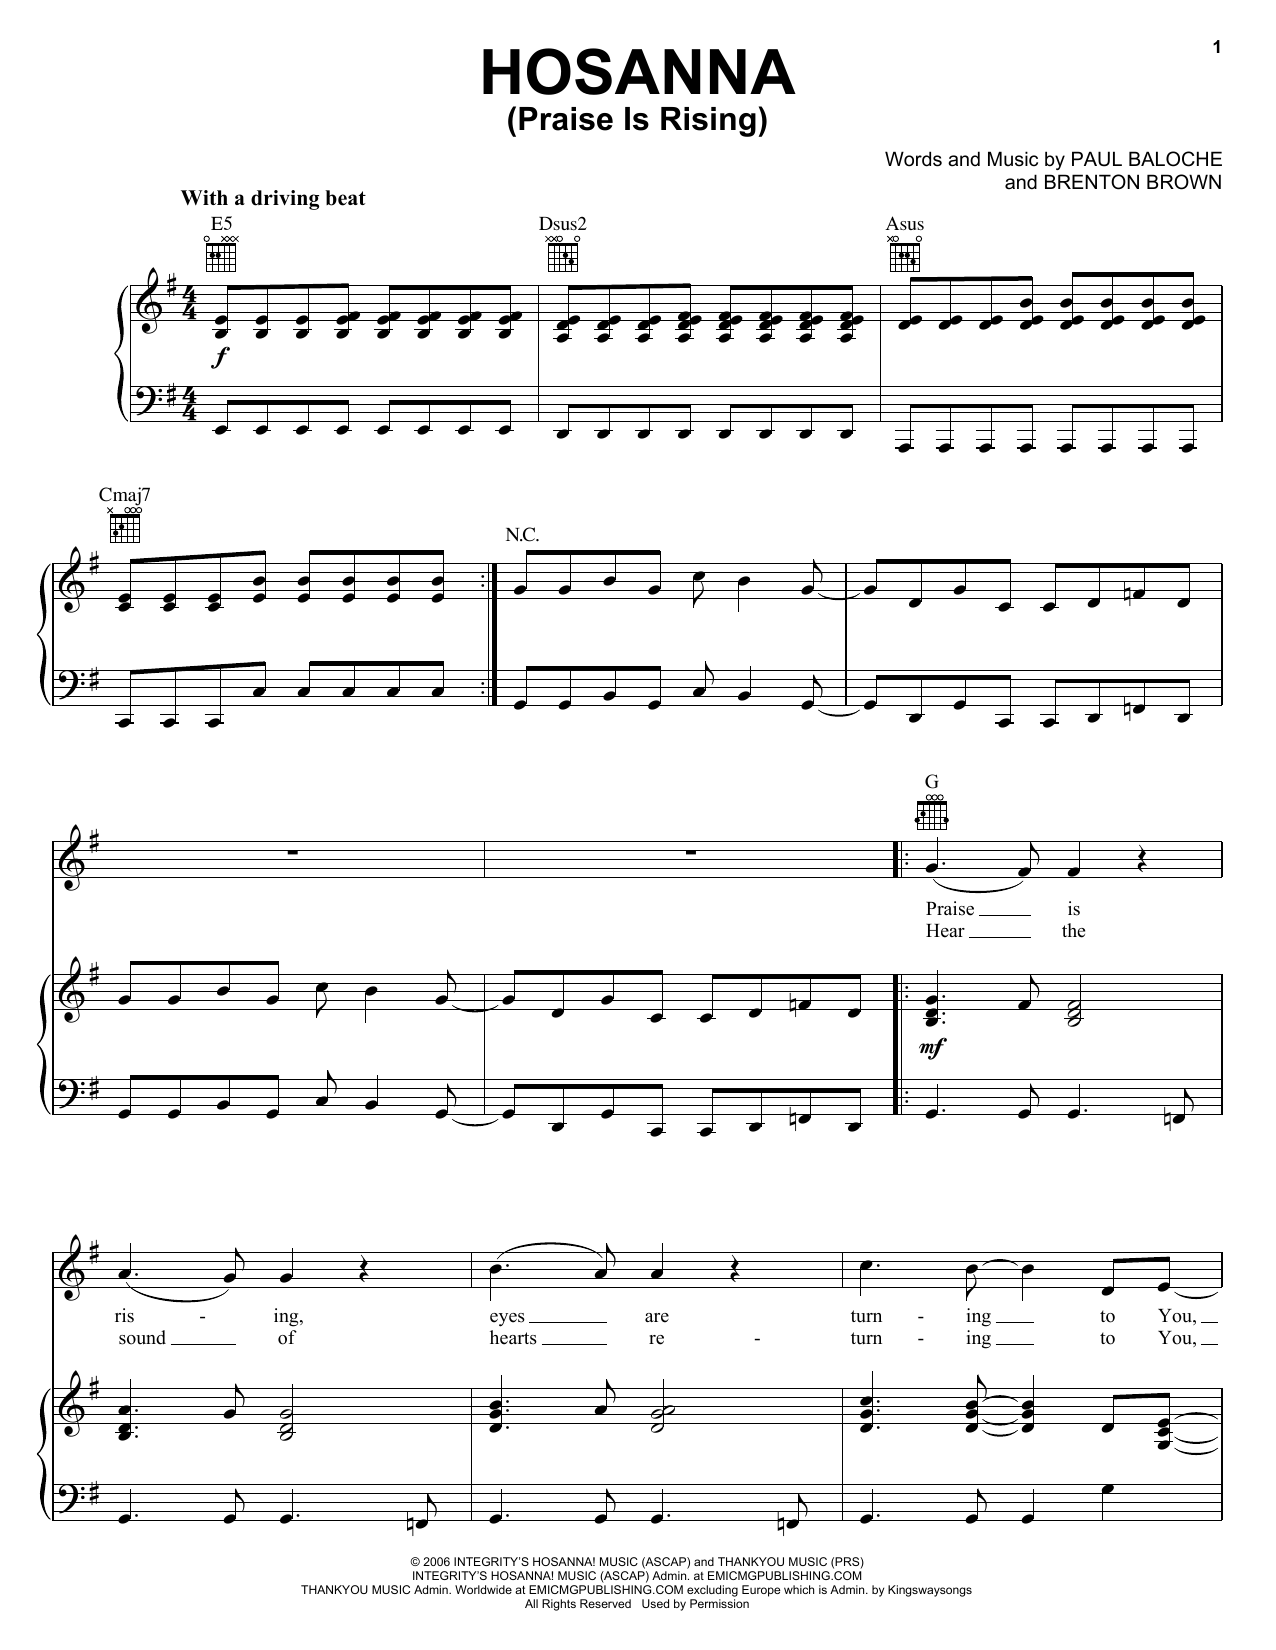 Paul Baloche Hosanna (Praise Is Rising) Sheet Music Notes & Chords for Ukulele - Download or Print PDF